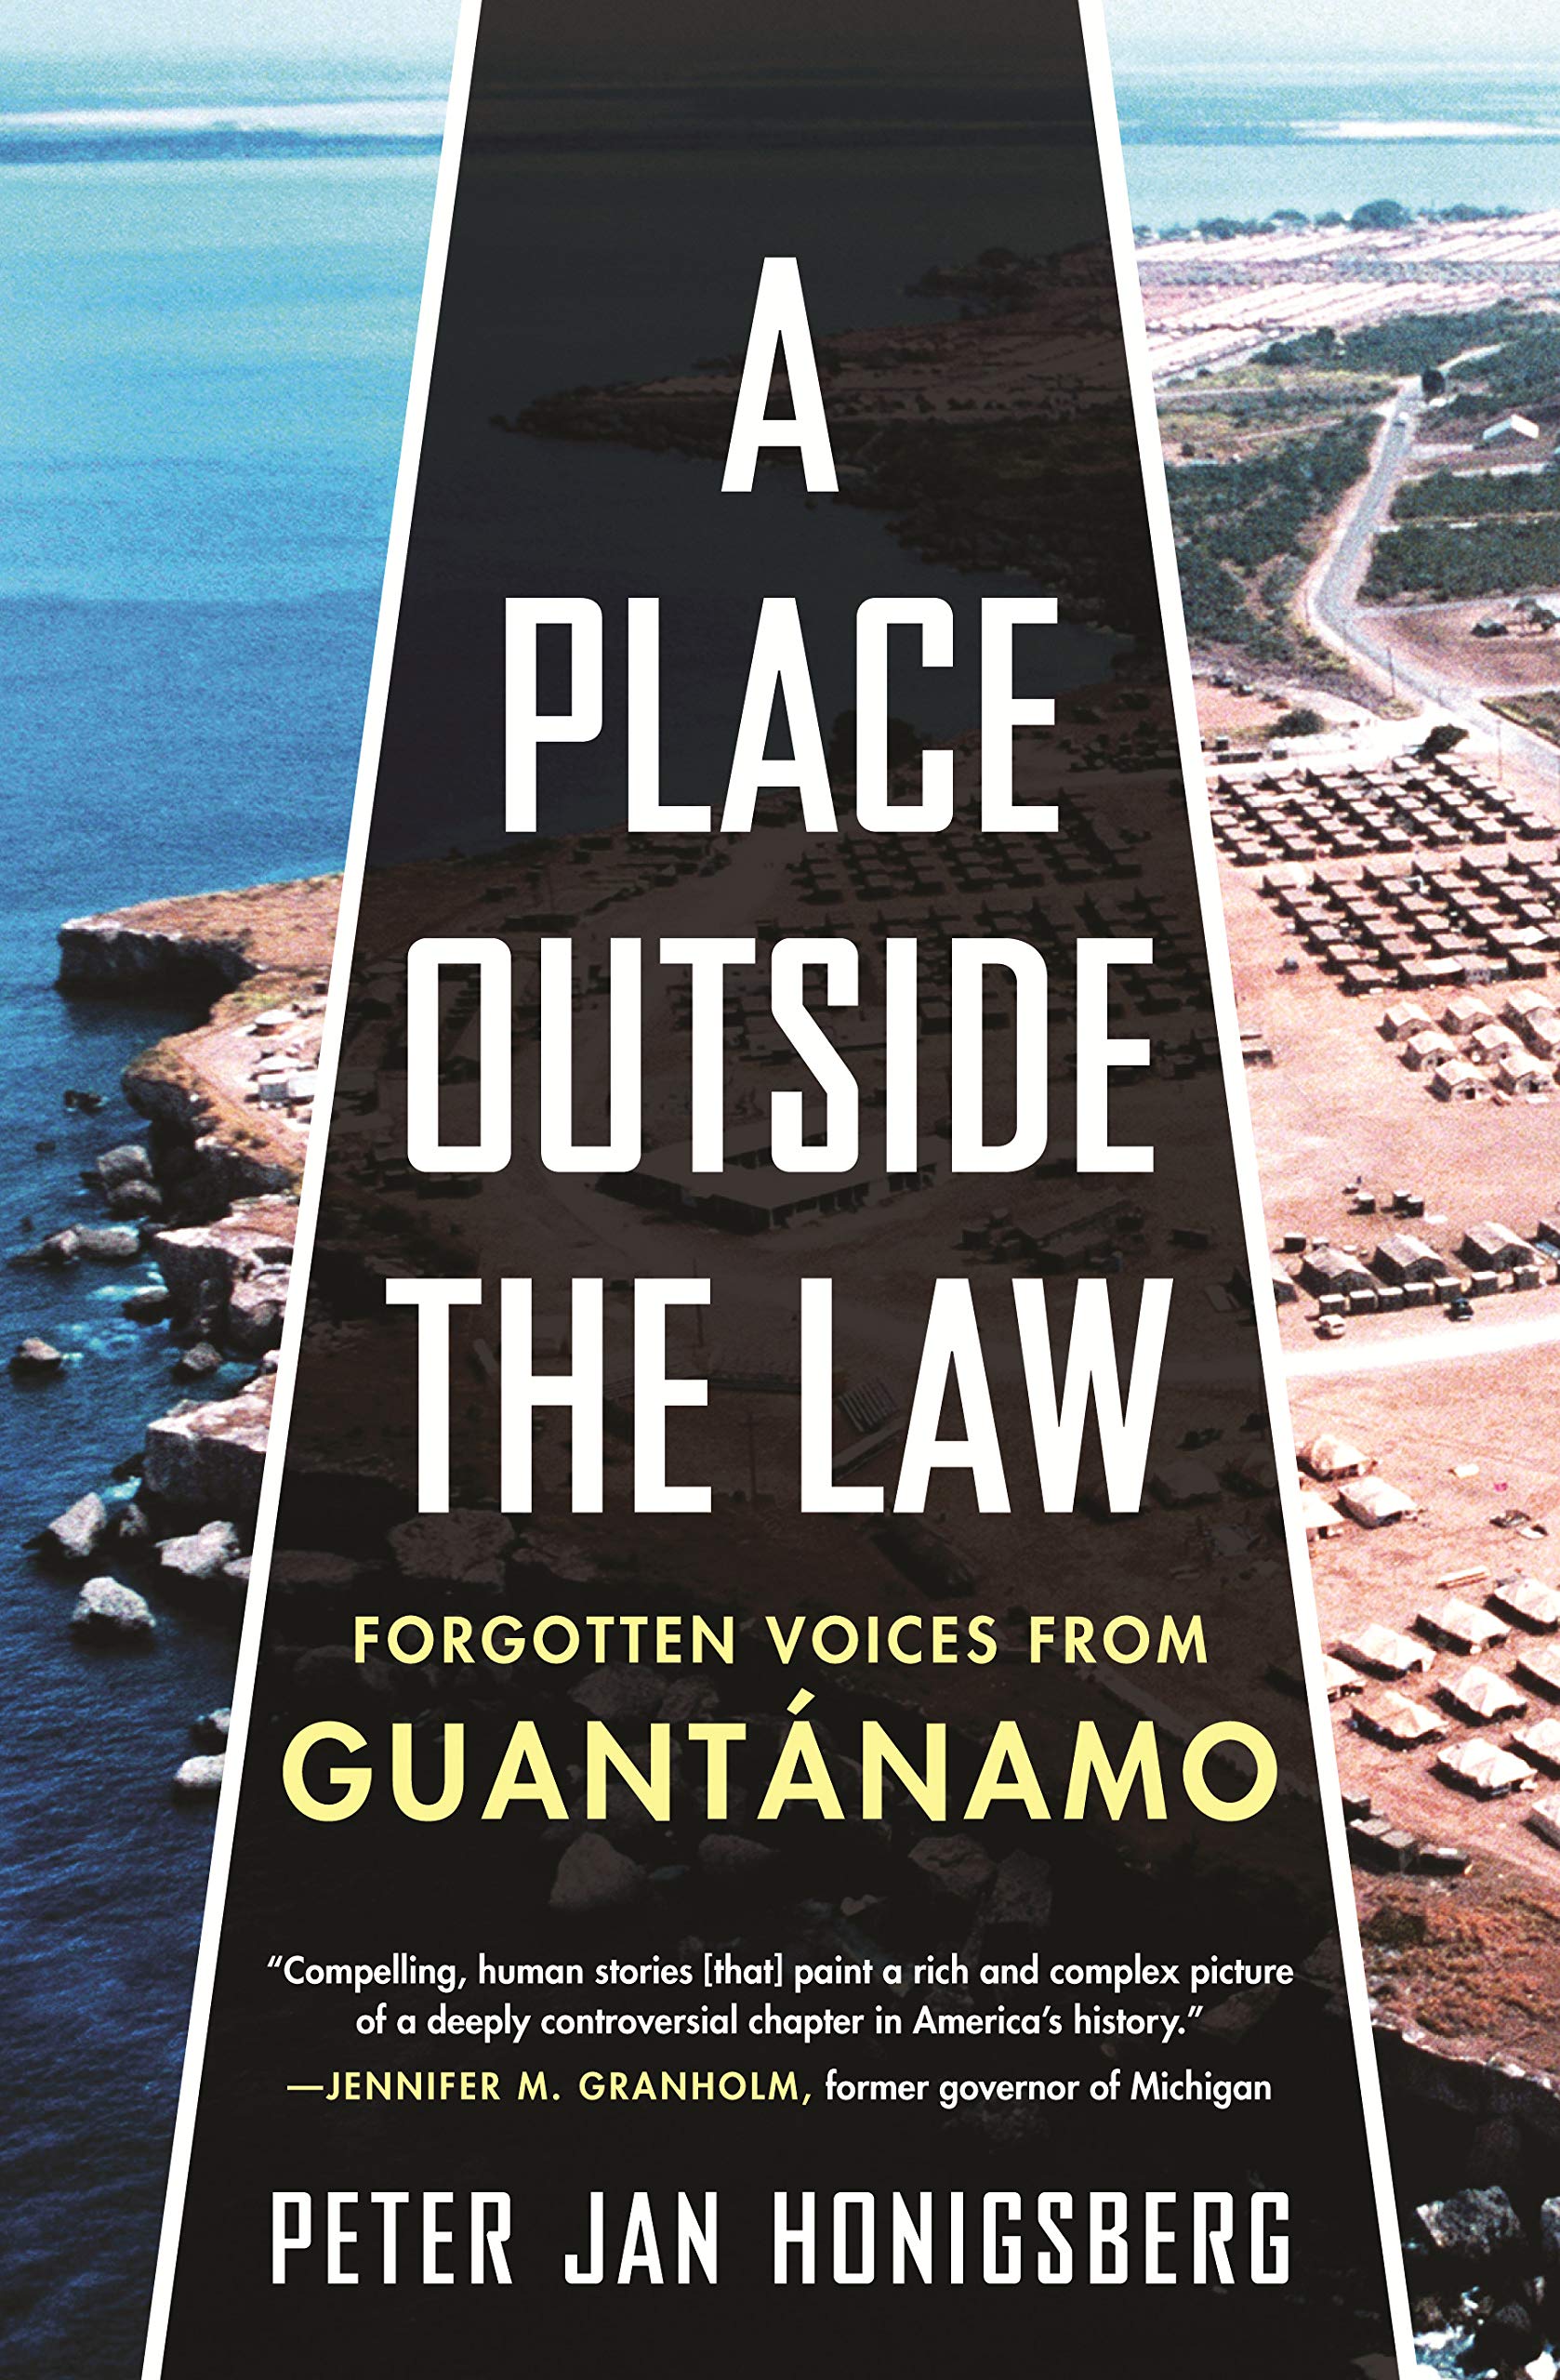 The Terror Courts Rough Justice at Guantanamo Bay 